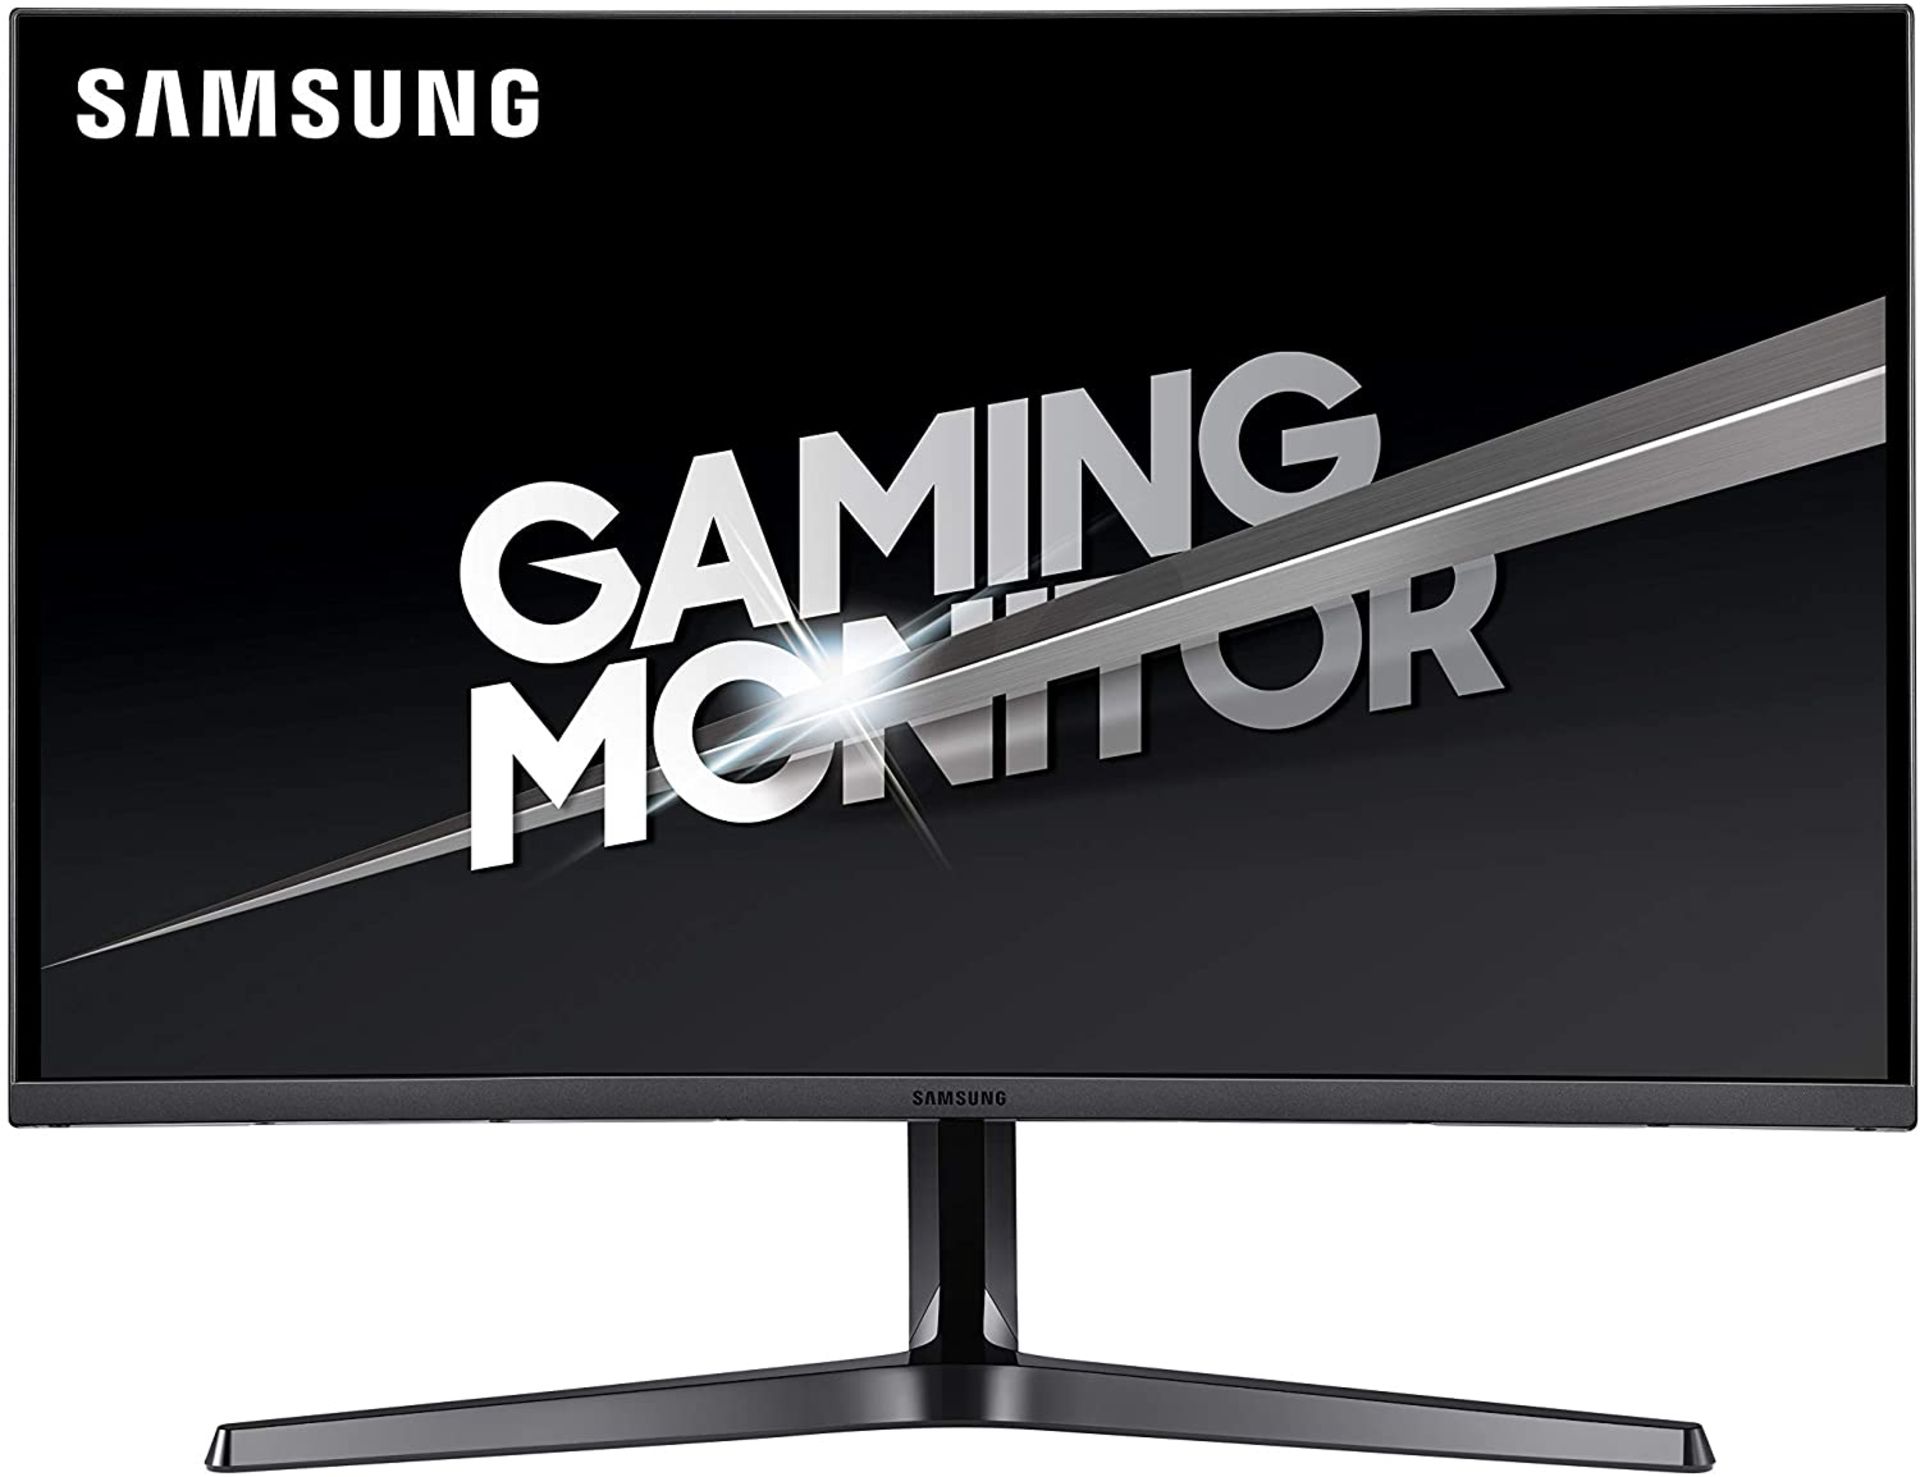 Samsung 27" Curved Gaming Monitor - WQHD 2560x1440, 144Hz, 2x HDMI, DisplayPort - Image 2 of 6